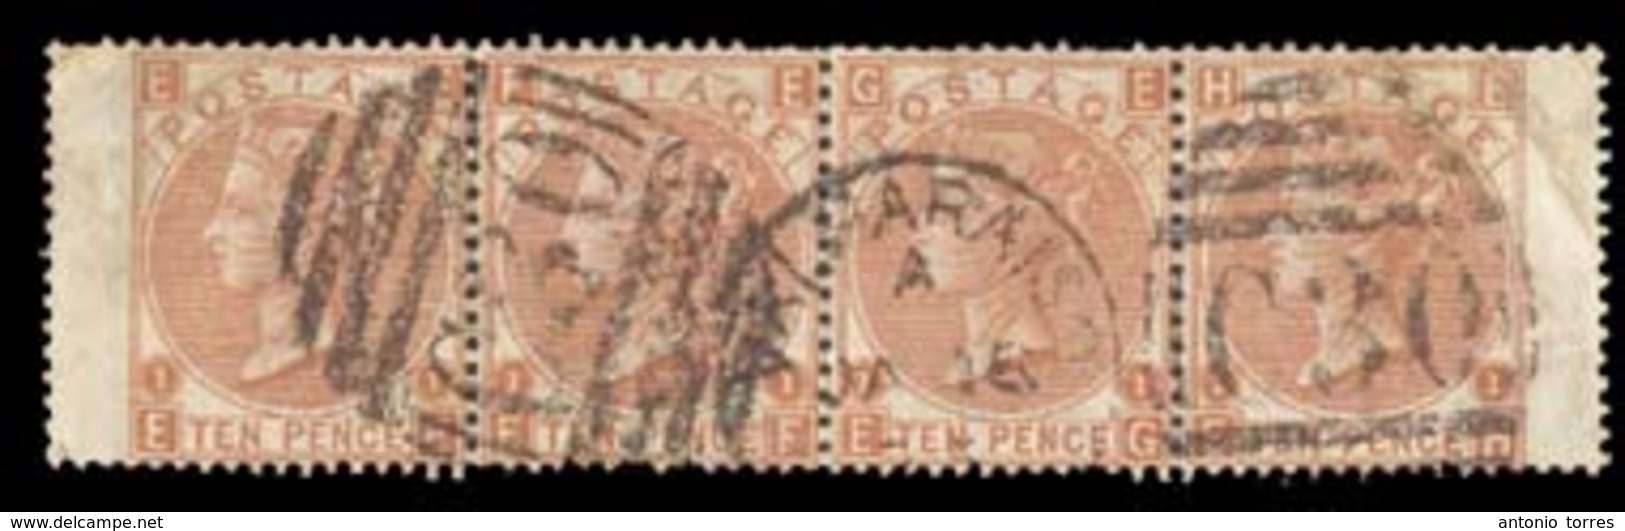 CHILE. 1875. BPO/Valparaiso . GB 10d Plate 1. Horizontal STRIP OF FOUR, Cancelled C-30 + Cds Valparaiso.Exceedingly Scar - Chile